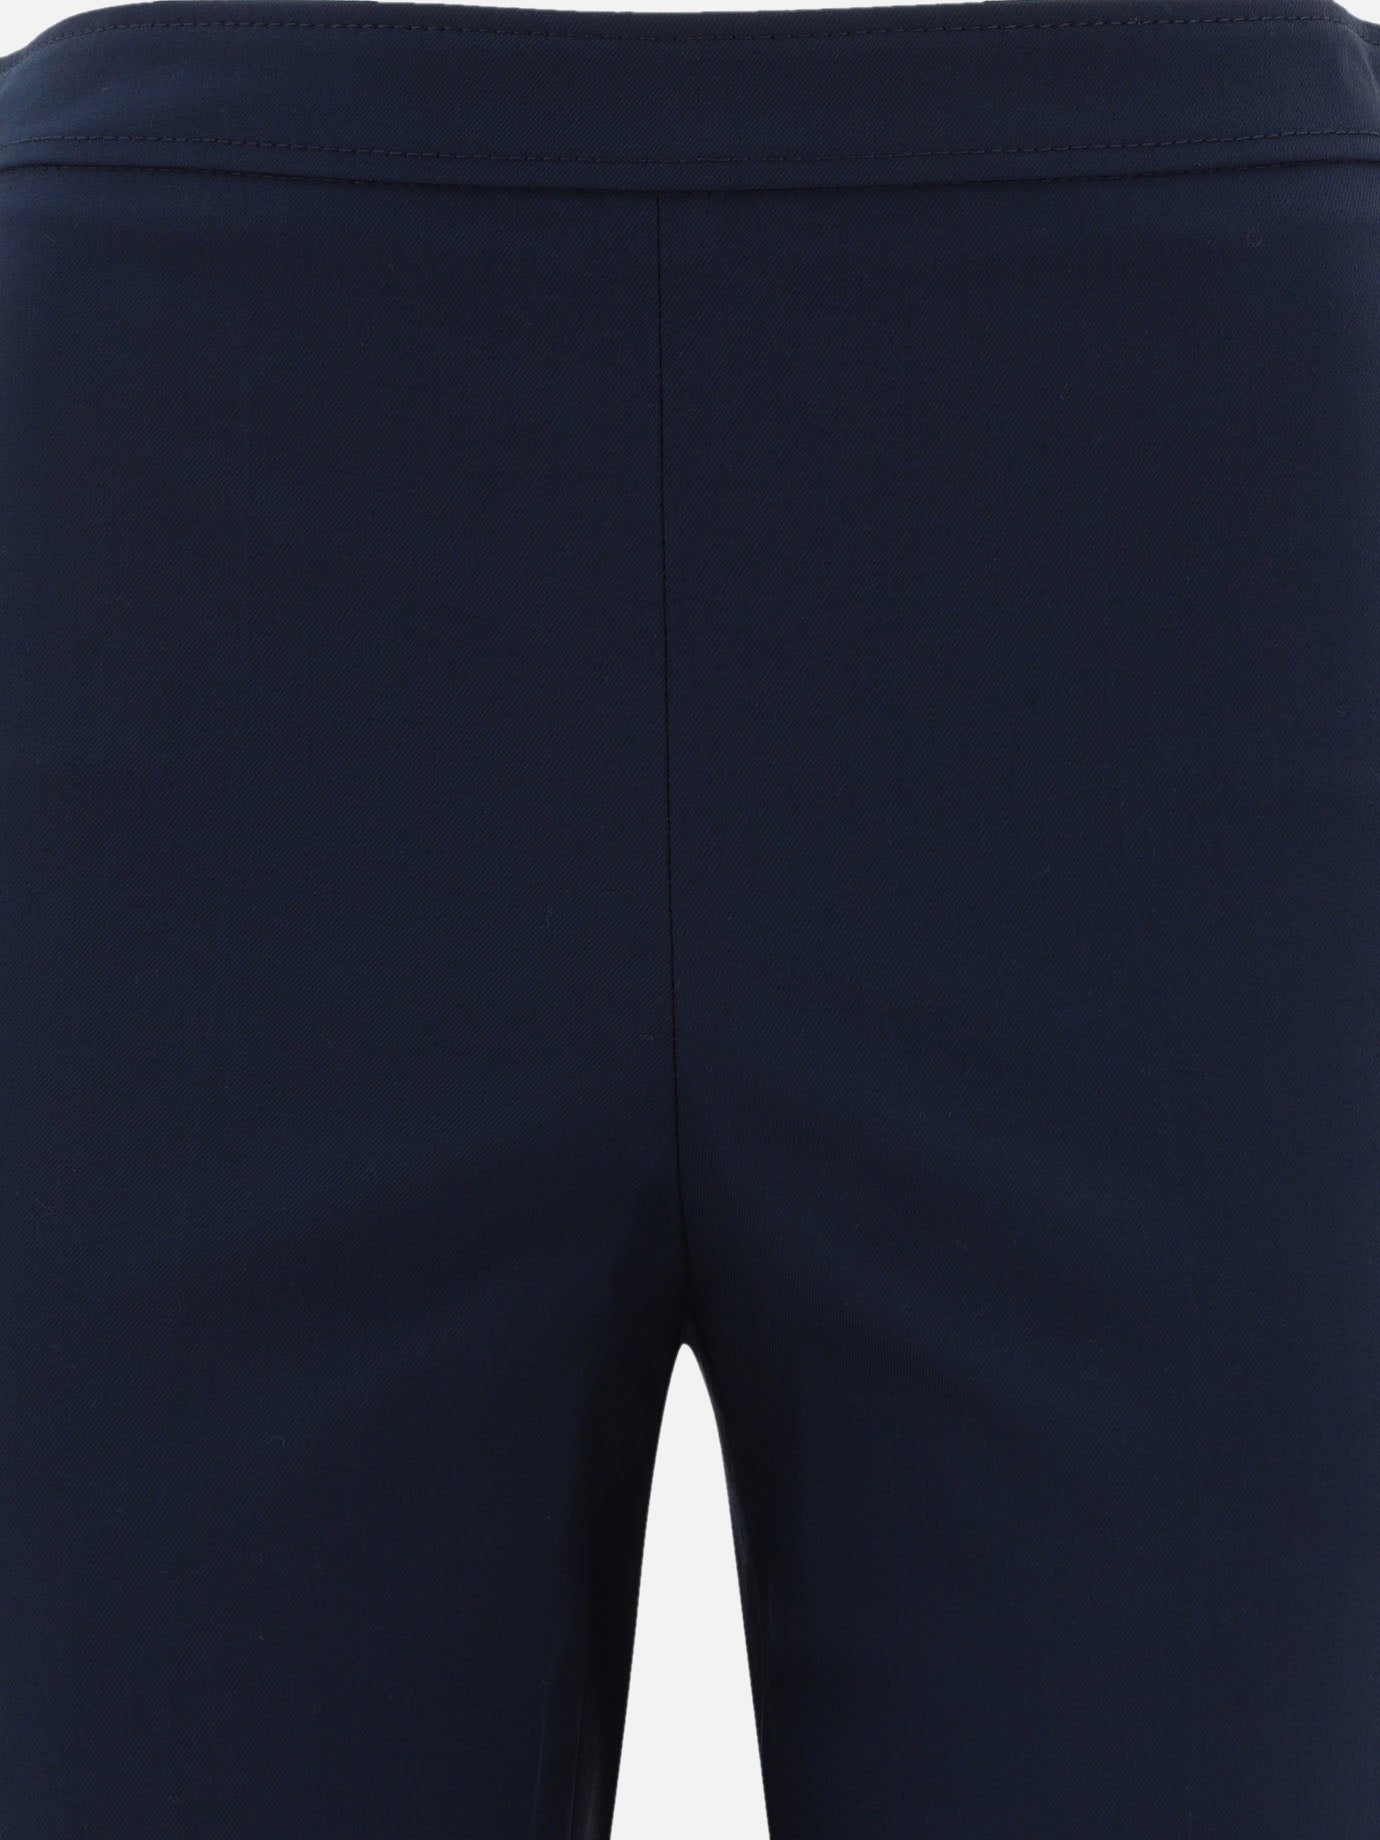 Capri trousers with monili